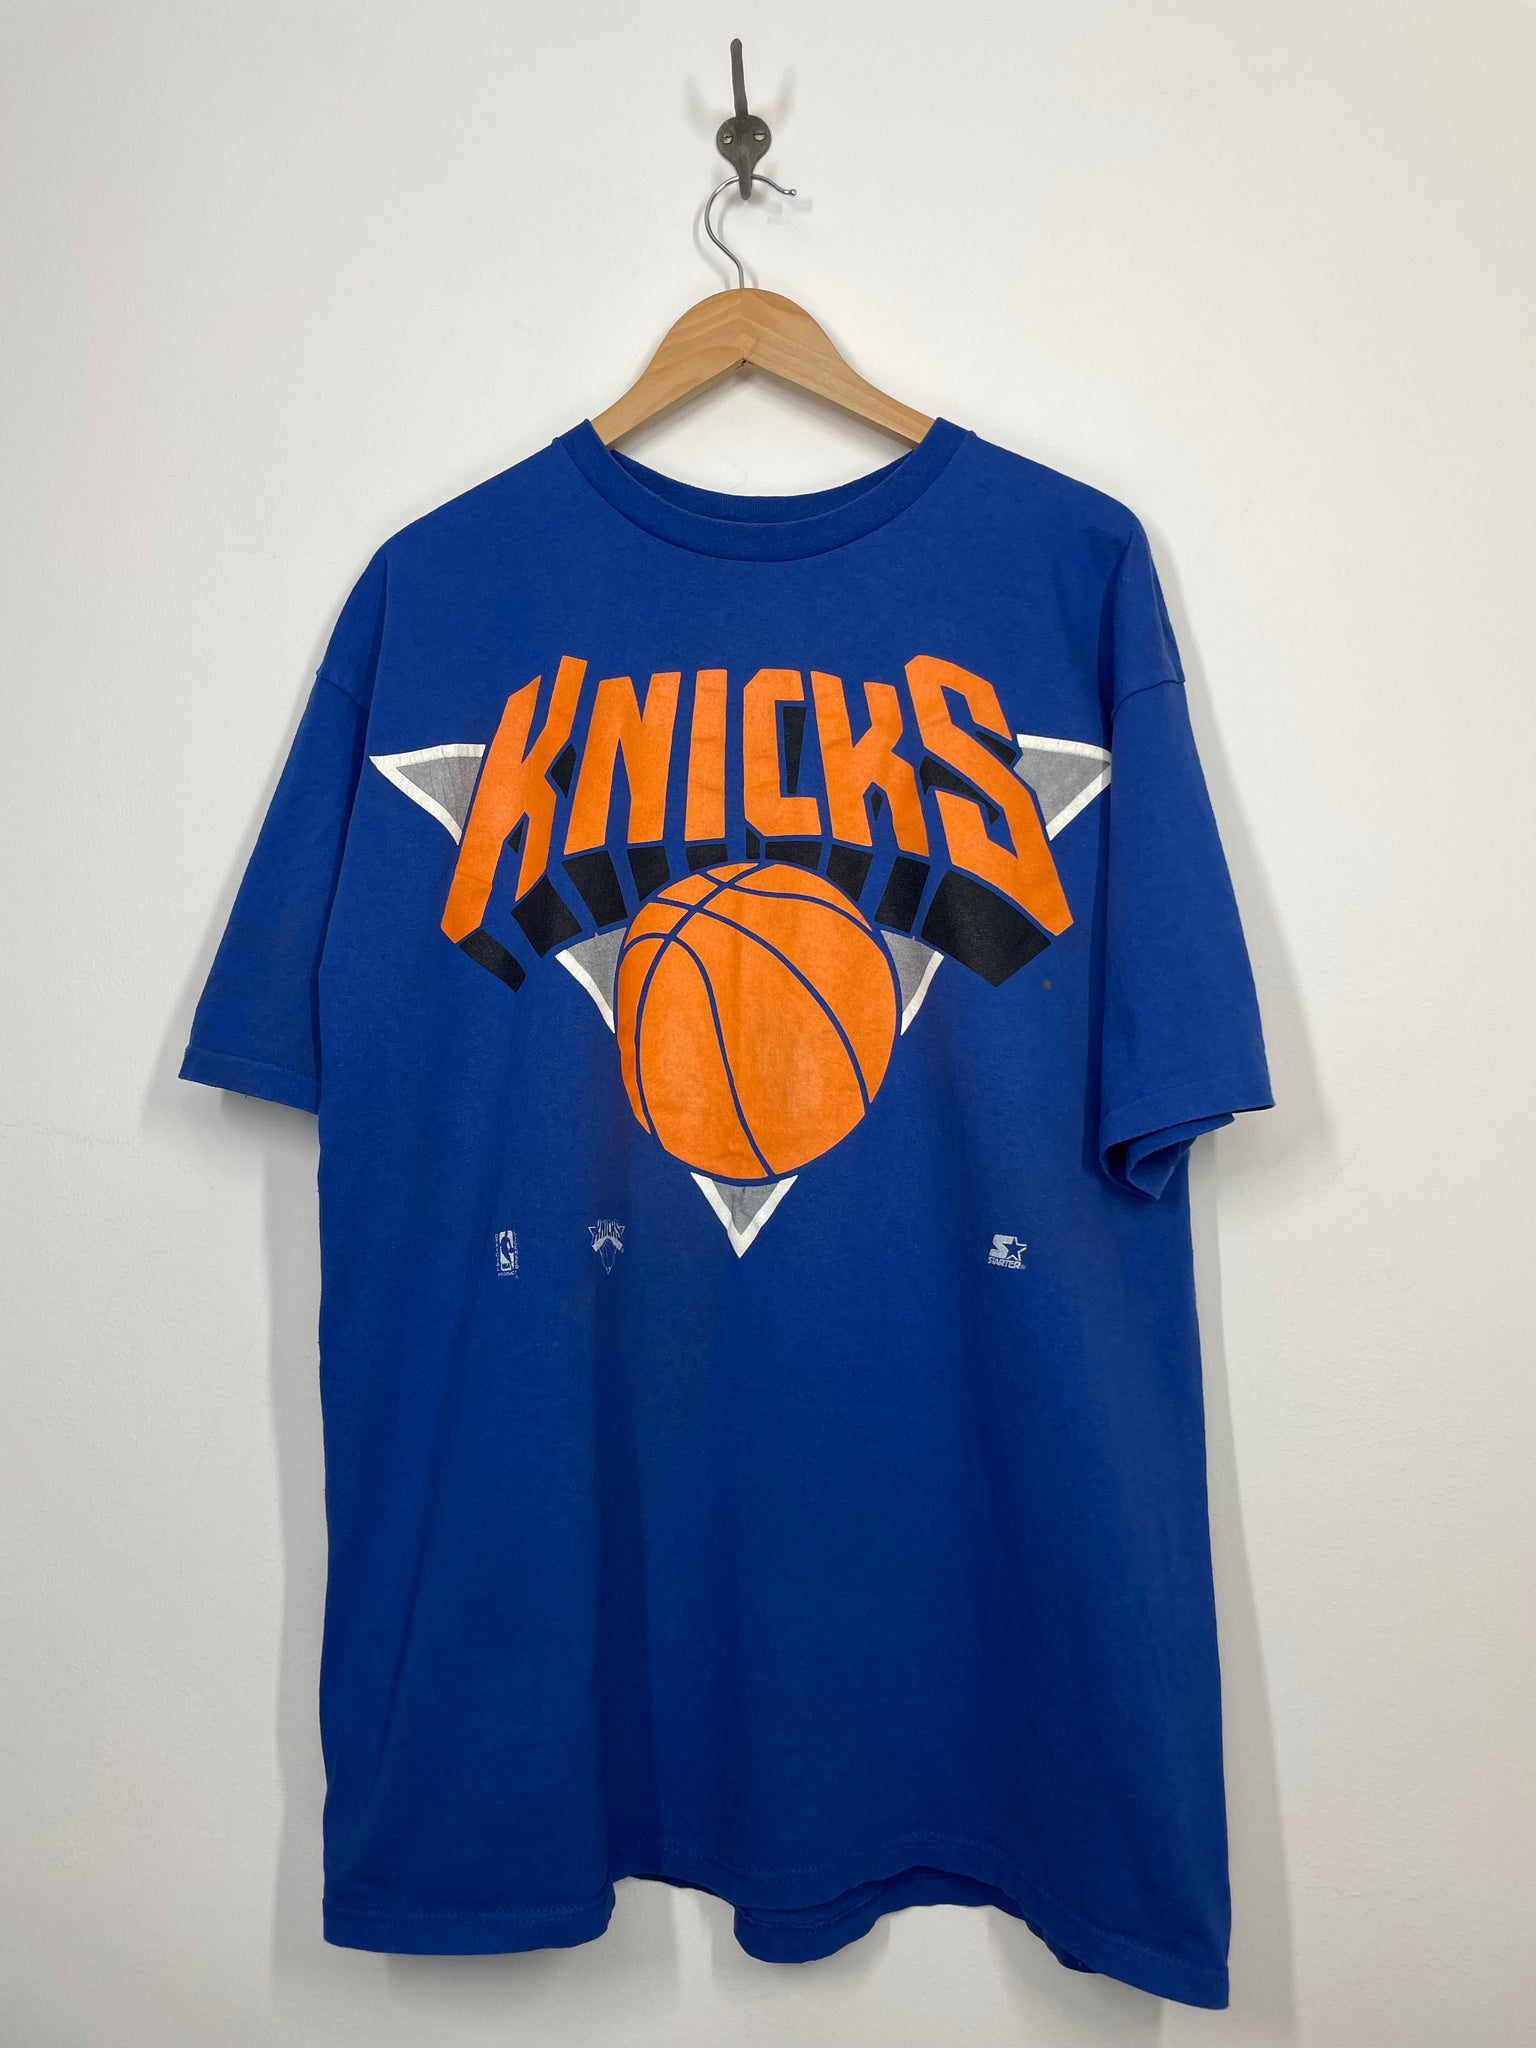 Shop Knicks Basketball Nba T Shirts, Hoodies, Sweatshirts & Merch